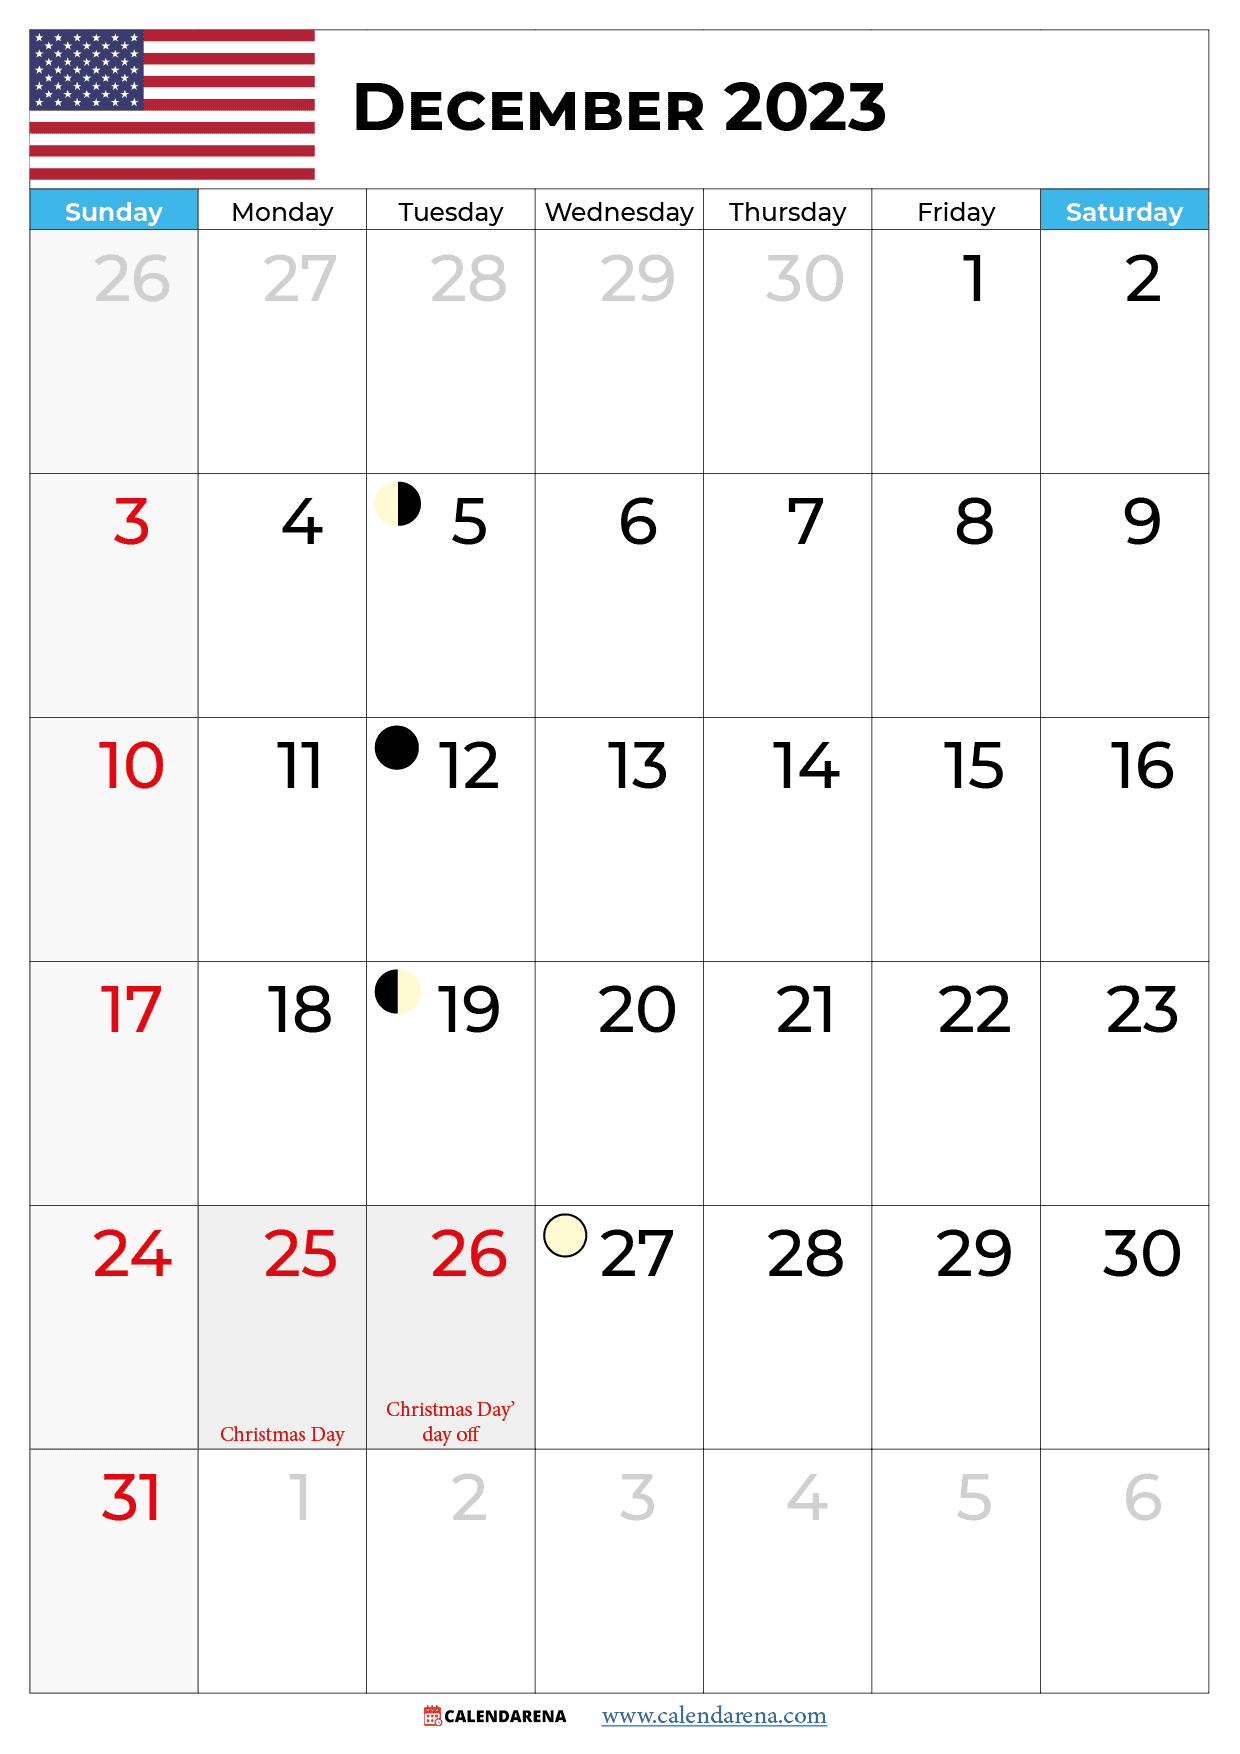 calendar december 2023 usa